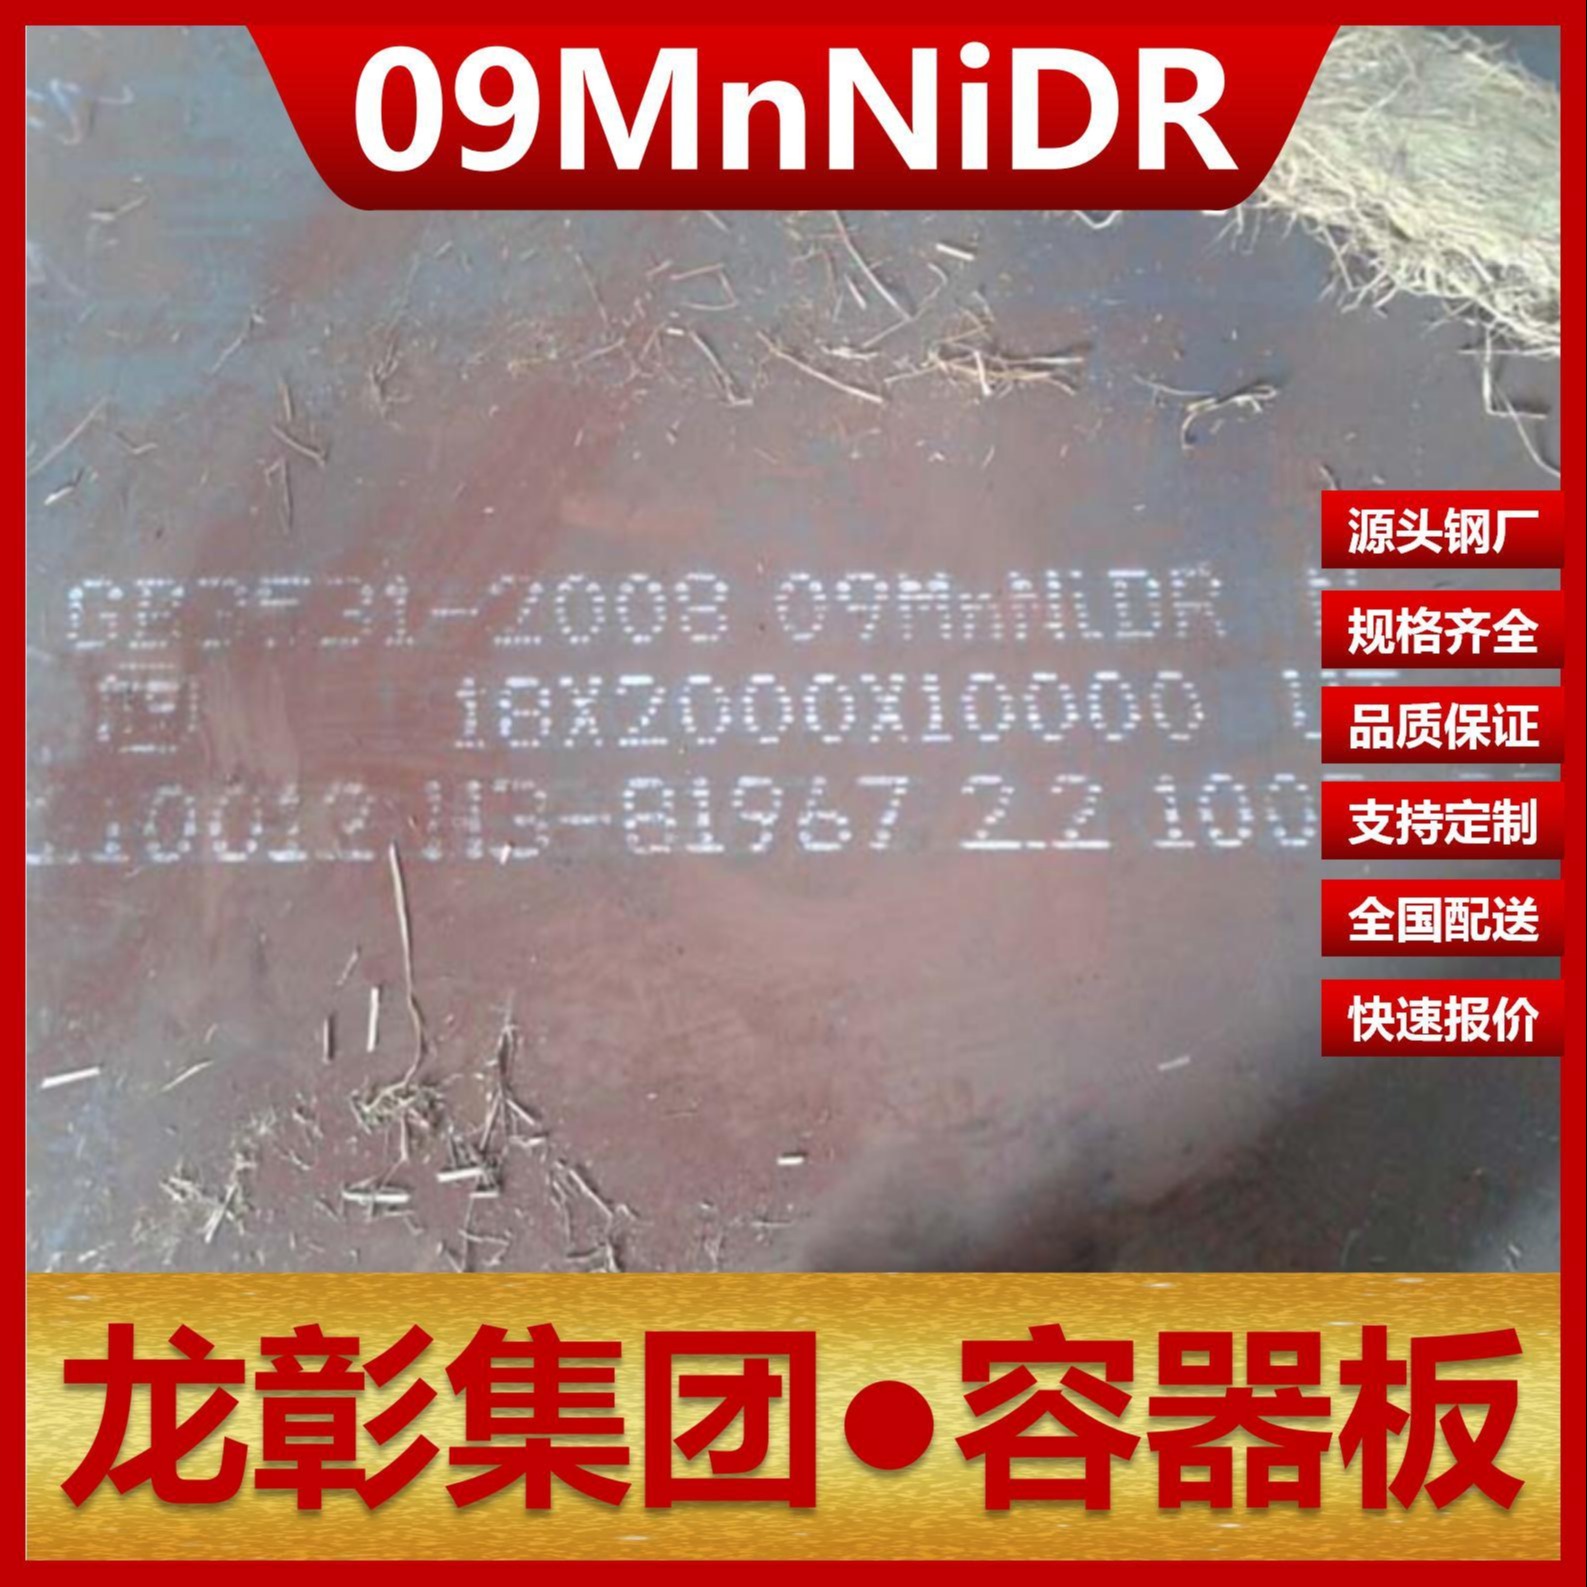 09MnNiDR容器板现货批零 龙彰集团主营钢板09MnNiDR压力容器板可开平分条图片